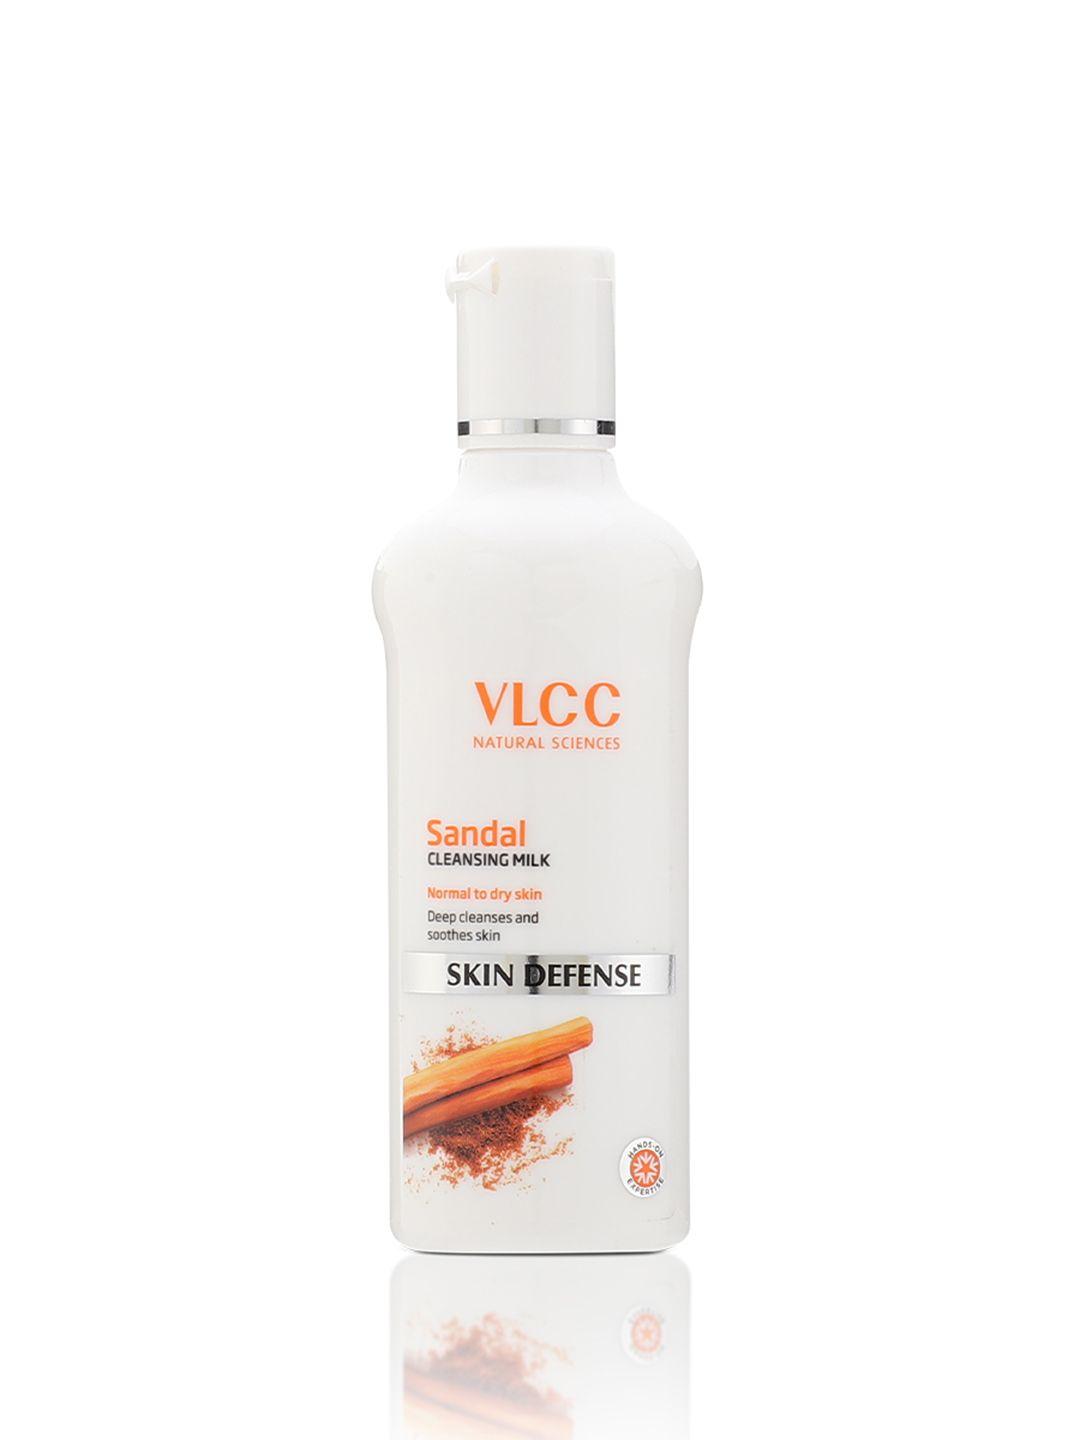 vlcc sandal cleansing milk for gentle makeup remover & skin nourishment - 100ml